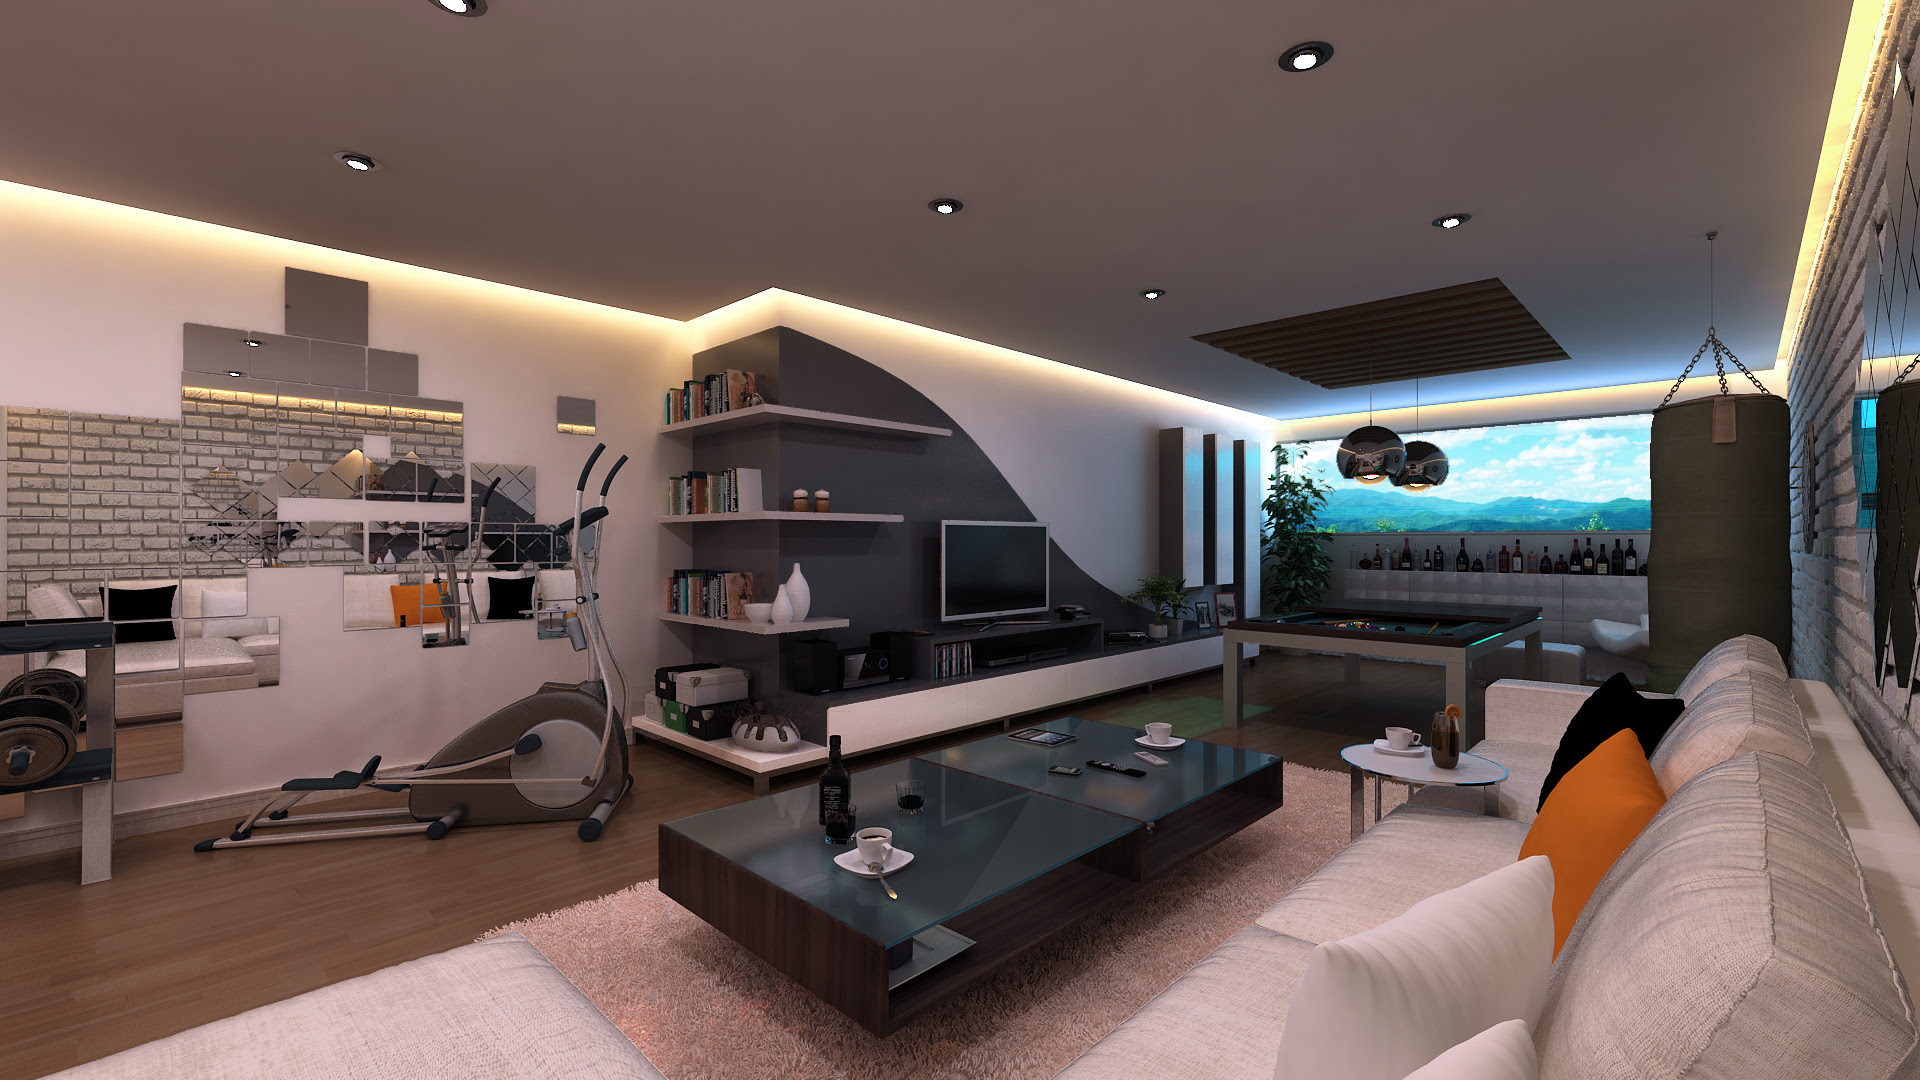 Decorate your room and enter design challenges to unlock furniture rewards and more! Elftug Kusadasi Games Room Interior Design Ideas